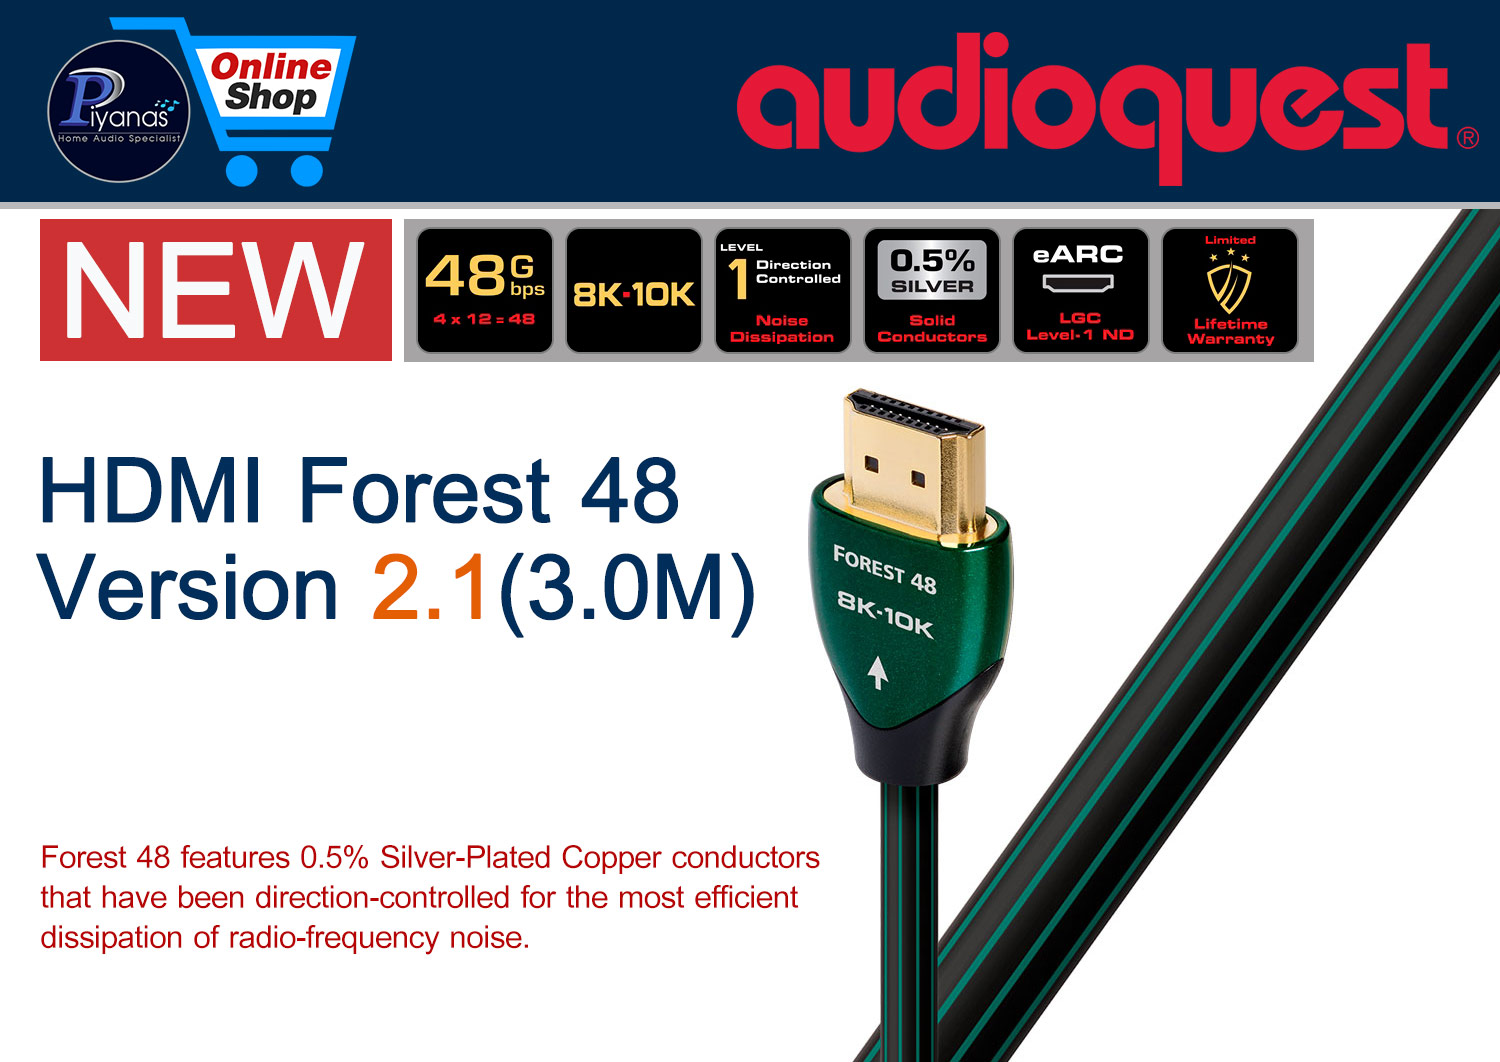 HDMI-Forest 48 Version 2.1 (3.0M)